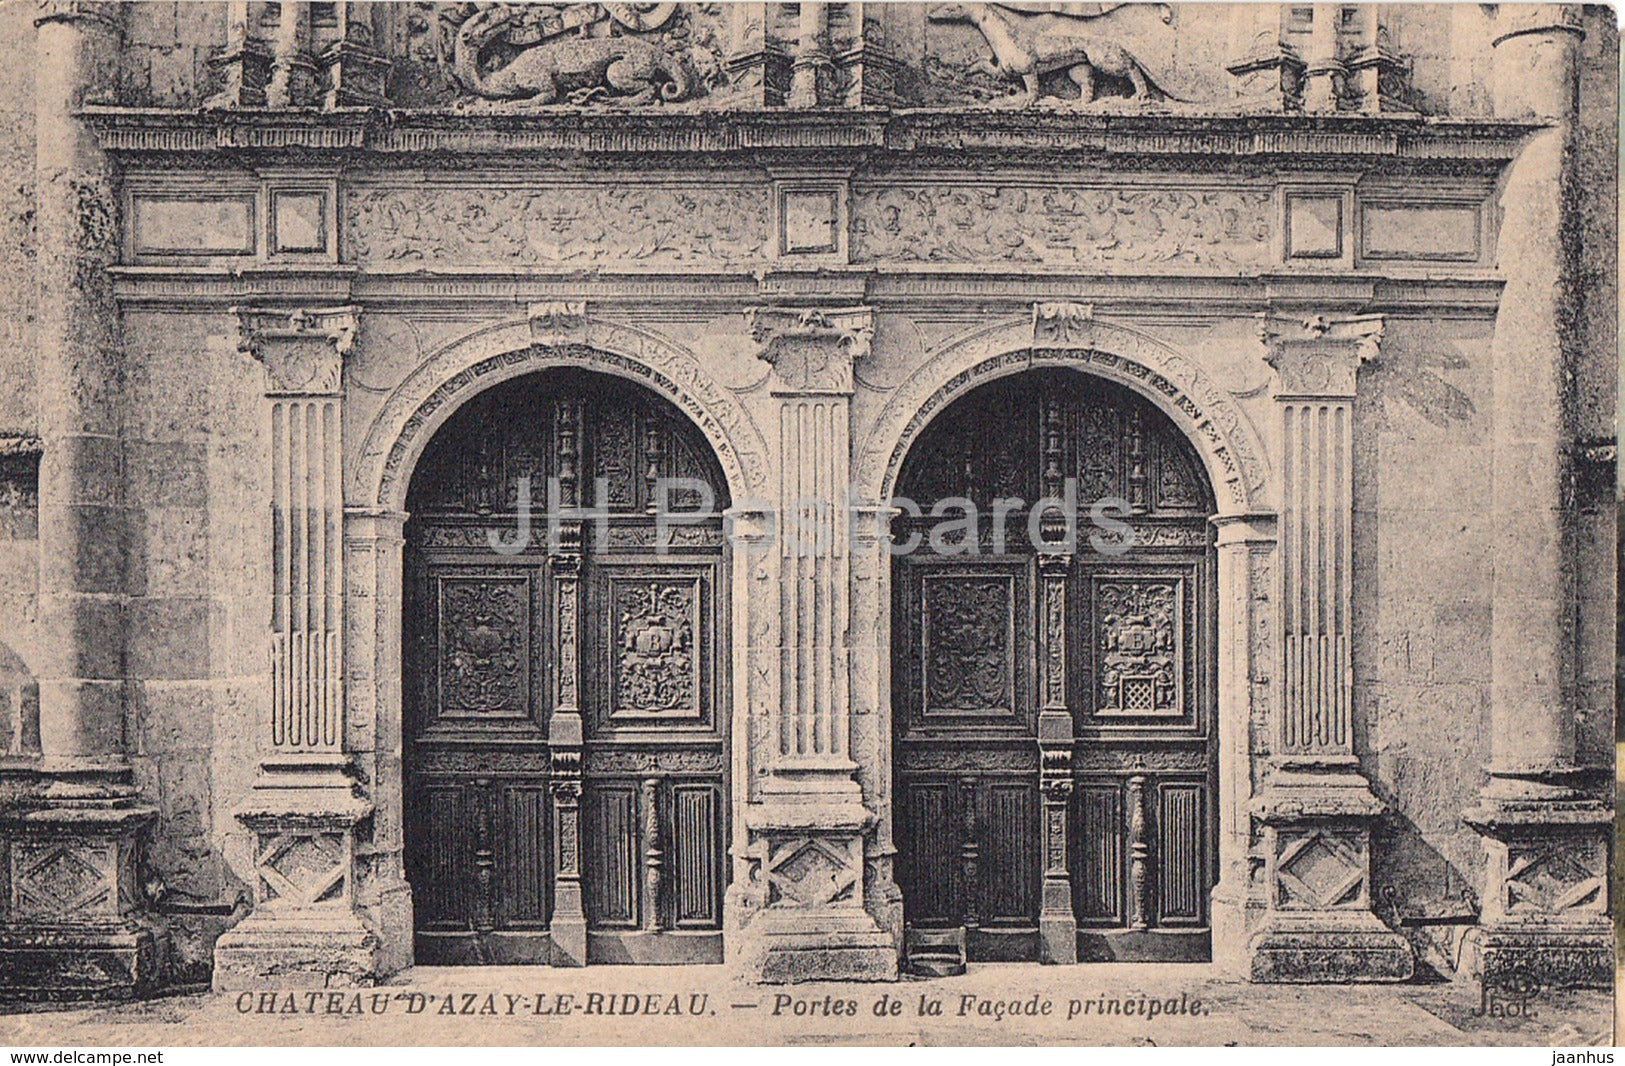 Chateau d' Azay Le Rideau - Portes de la Facade principale - castle - old postcard - France - unused